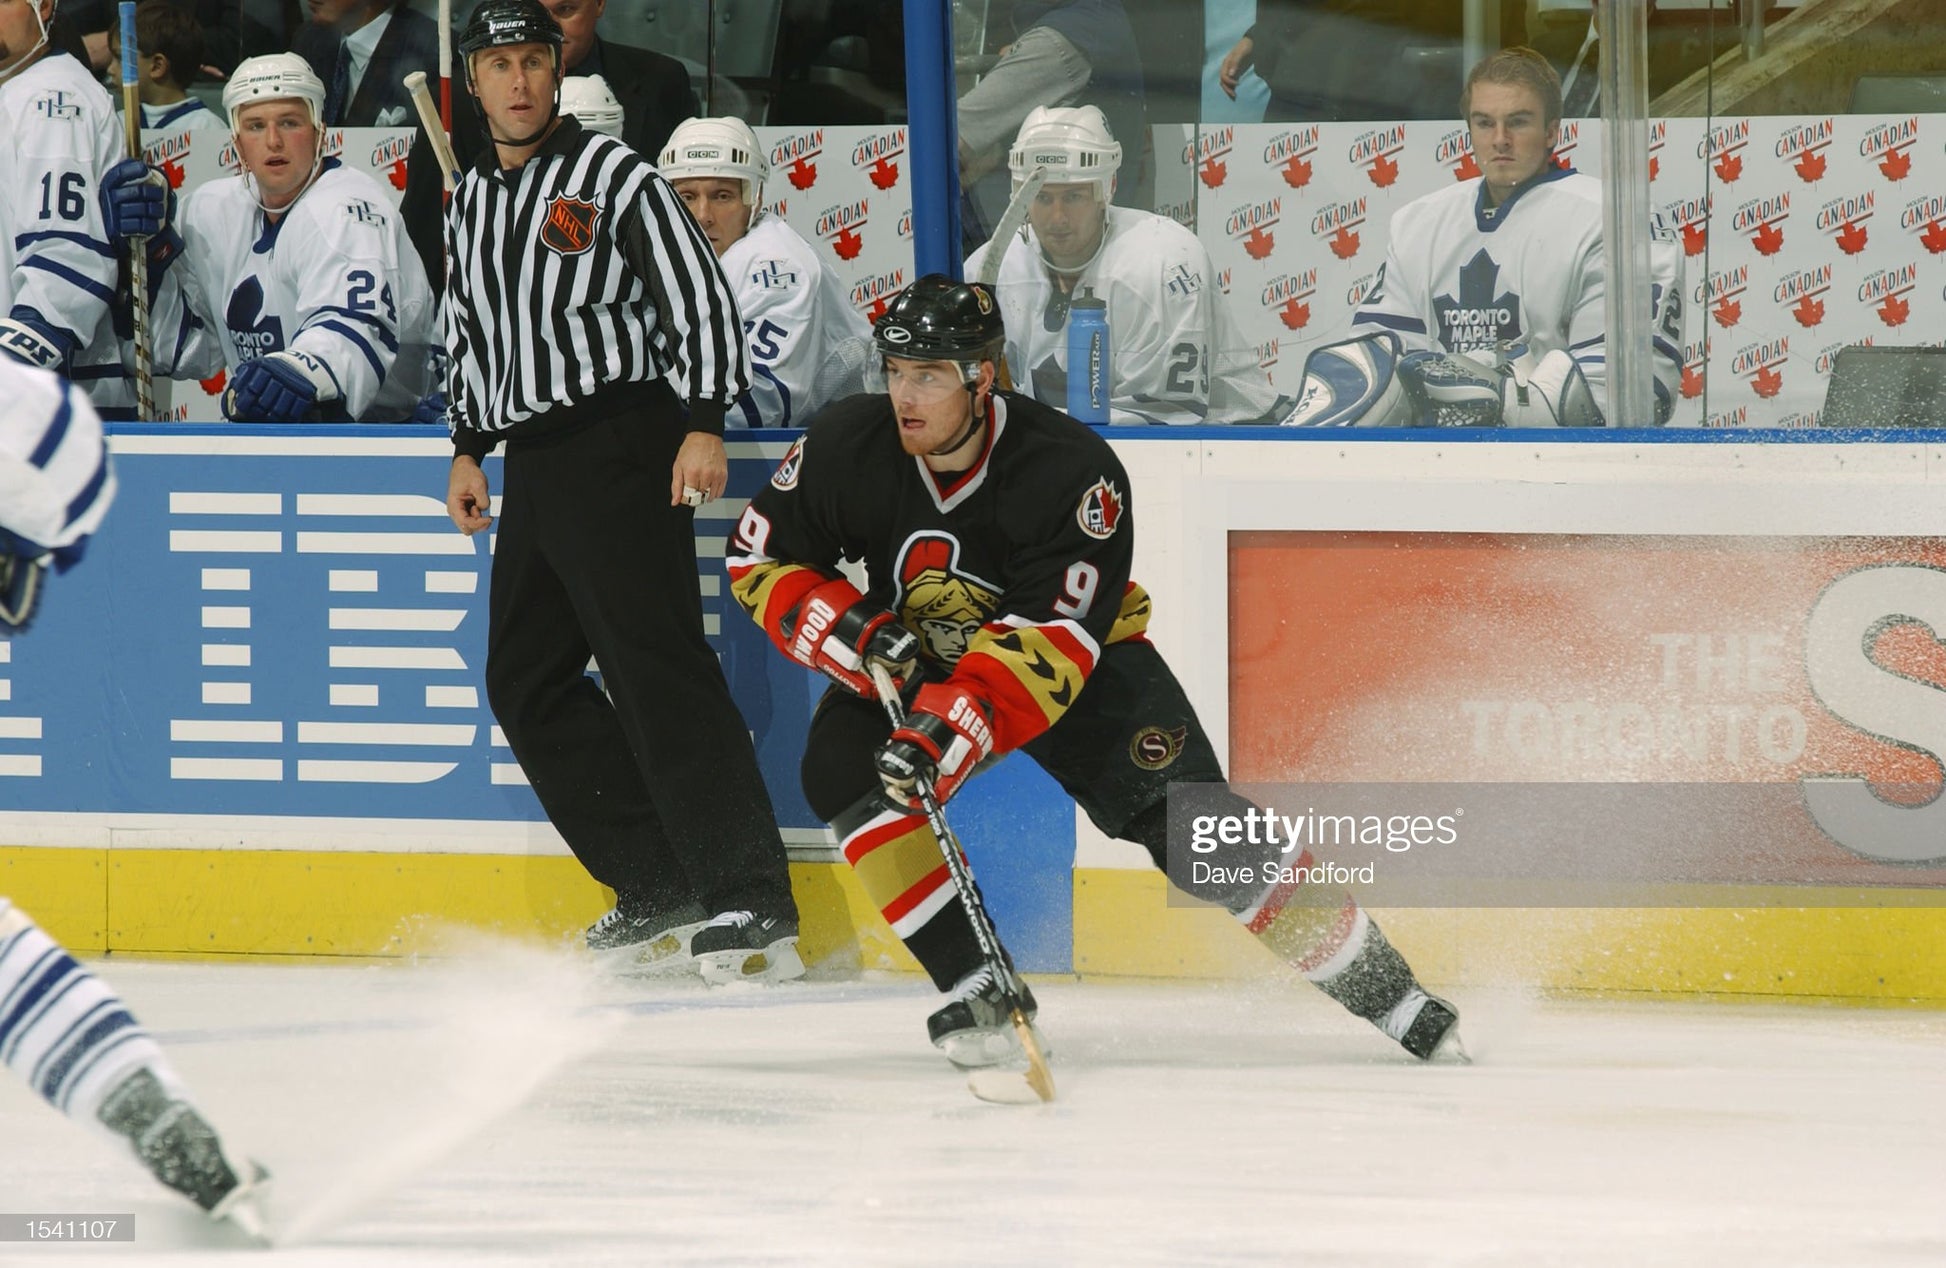 San Jose Sharks 1991-1996 Hockey Jersey (44/Medium)